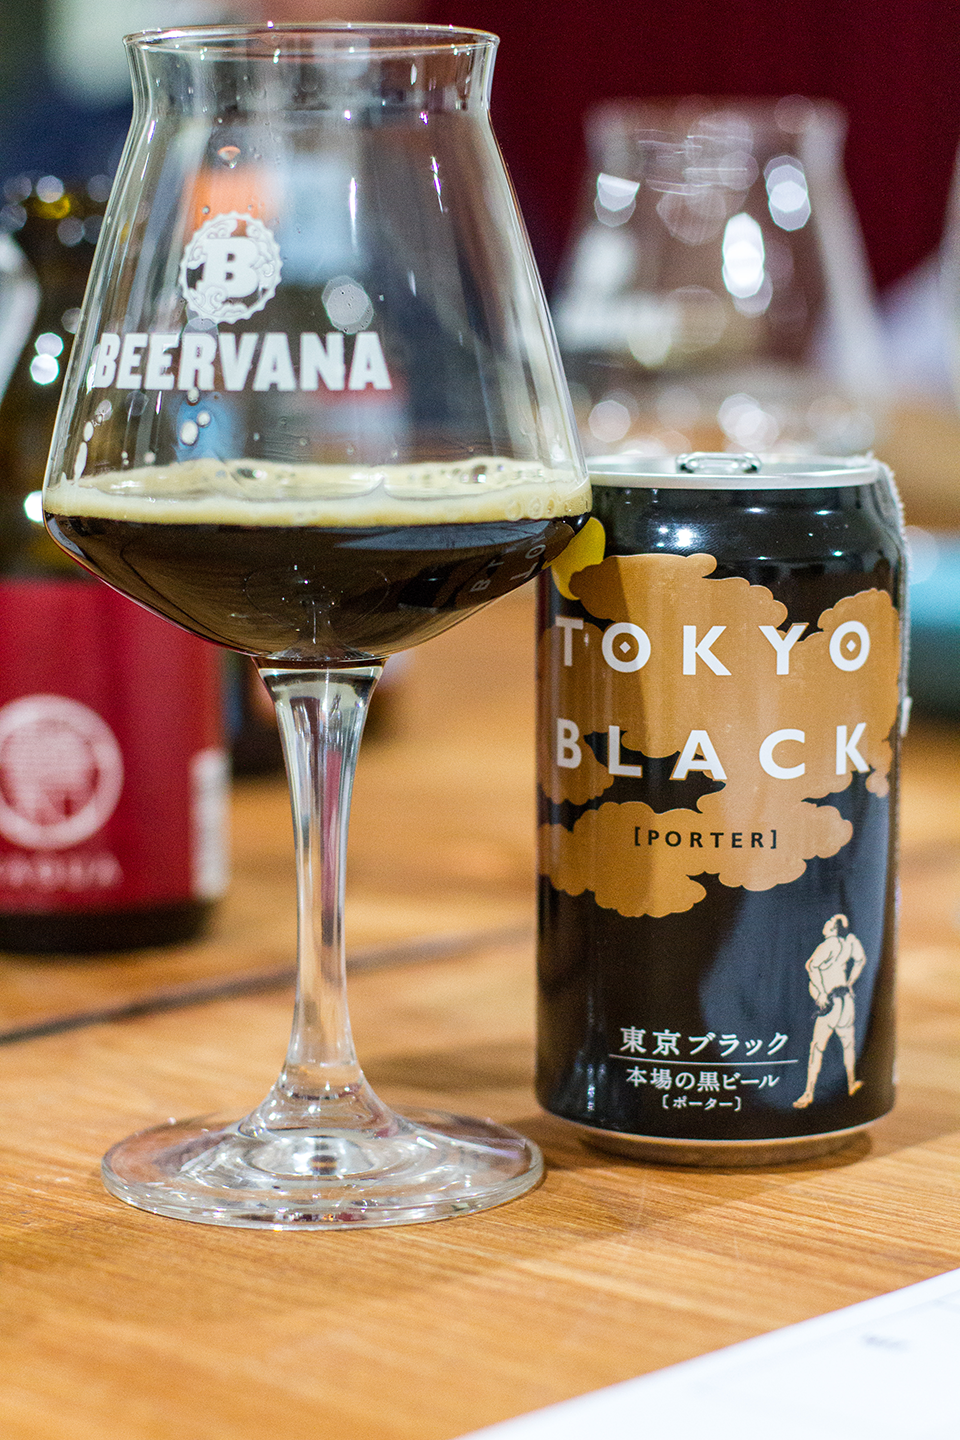 Tokyo Black Porter - Yoho Brewery, Japan